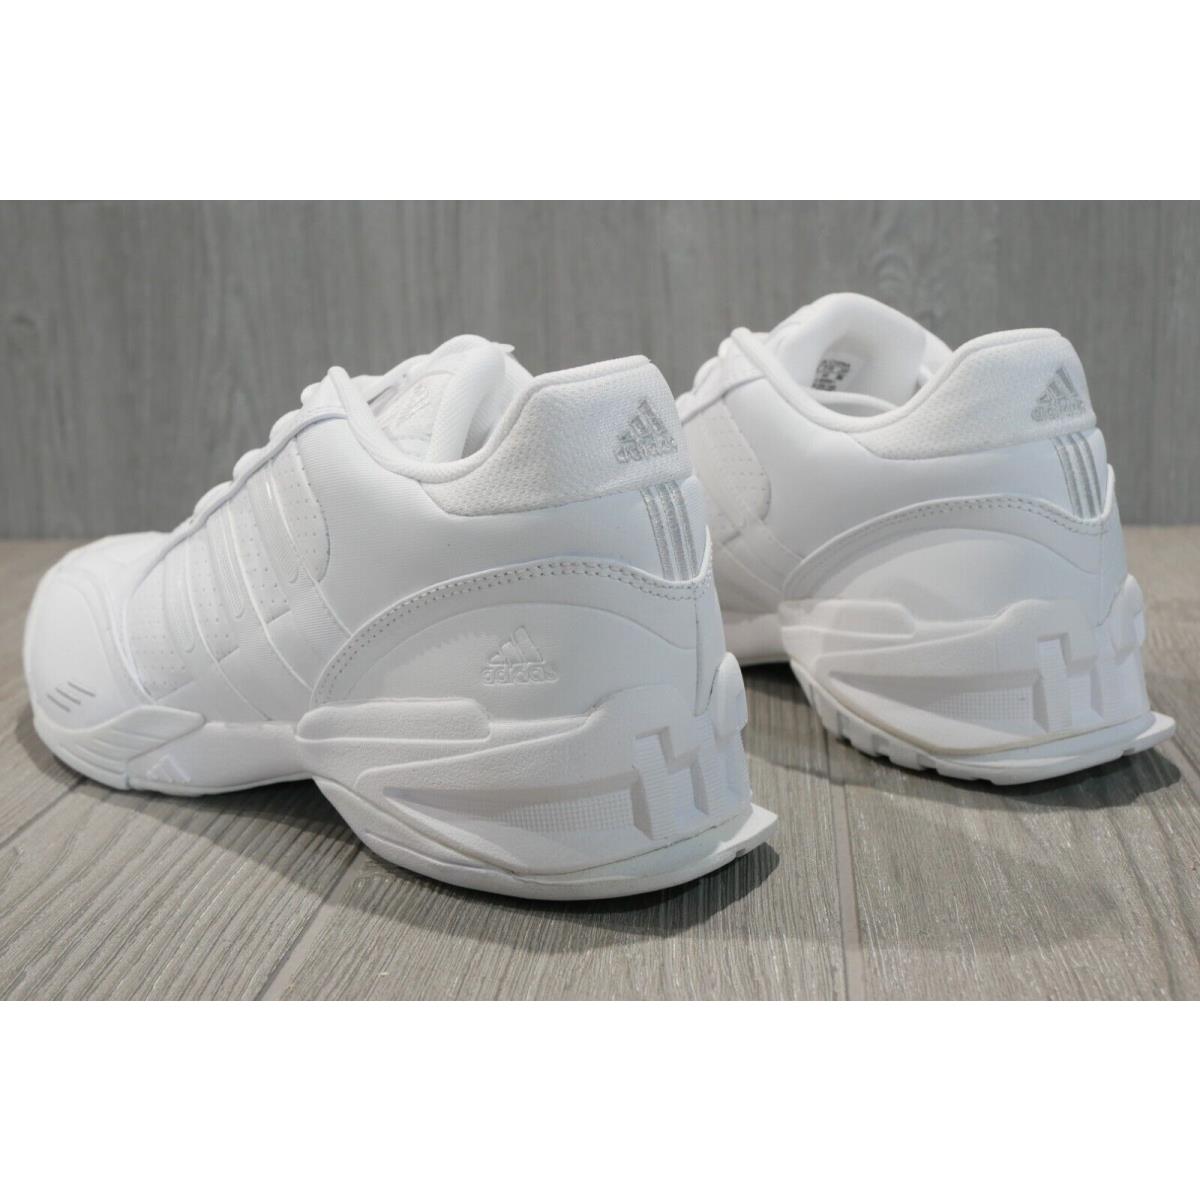 Adidas shoes Vintage - White 3